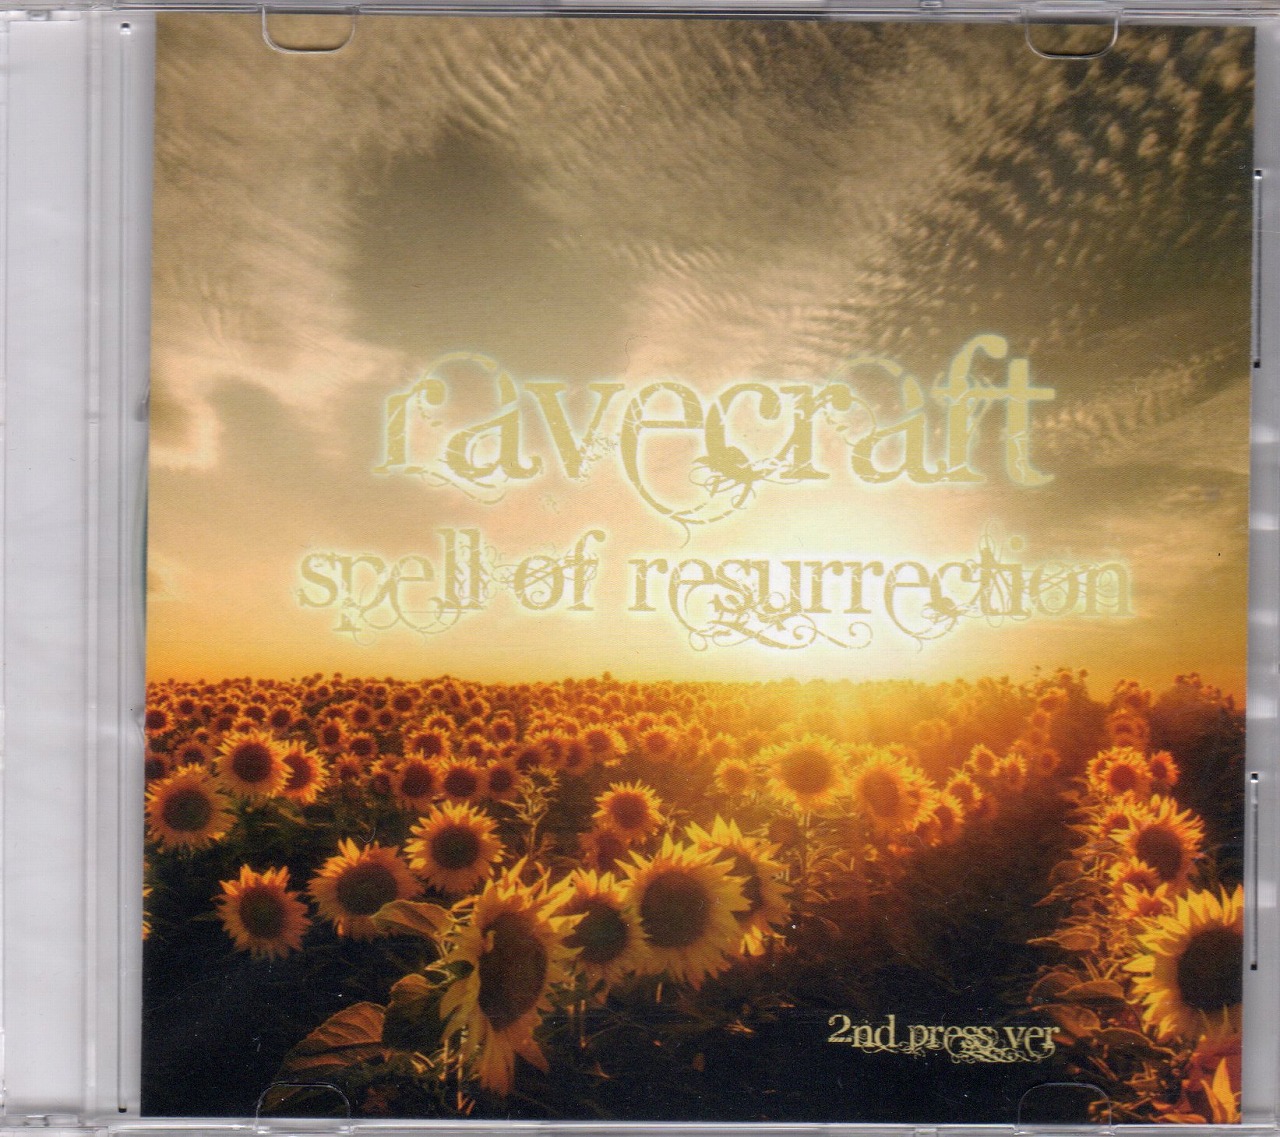 Ravecraft ( レイヴクラフト )  の CD 【2nd press ver】Spell of resurrection